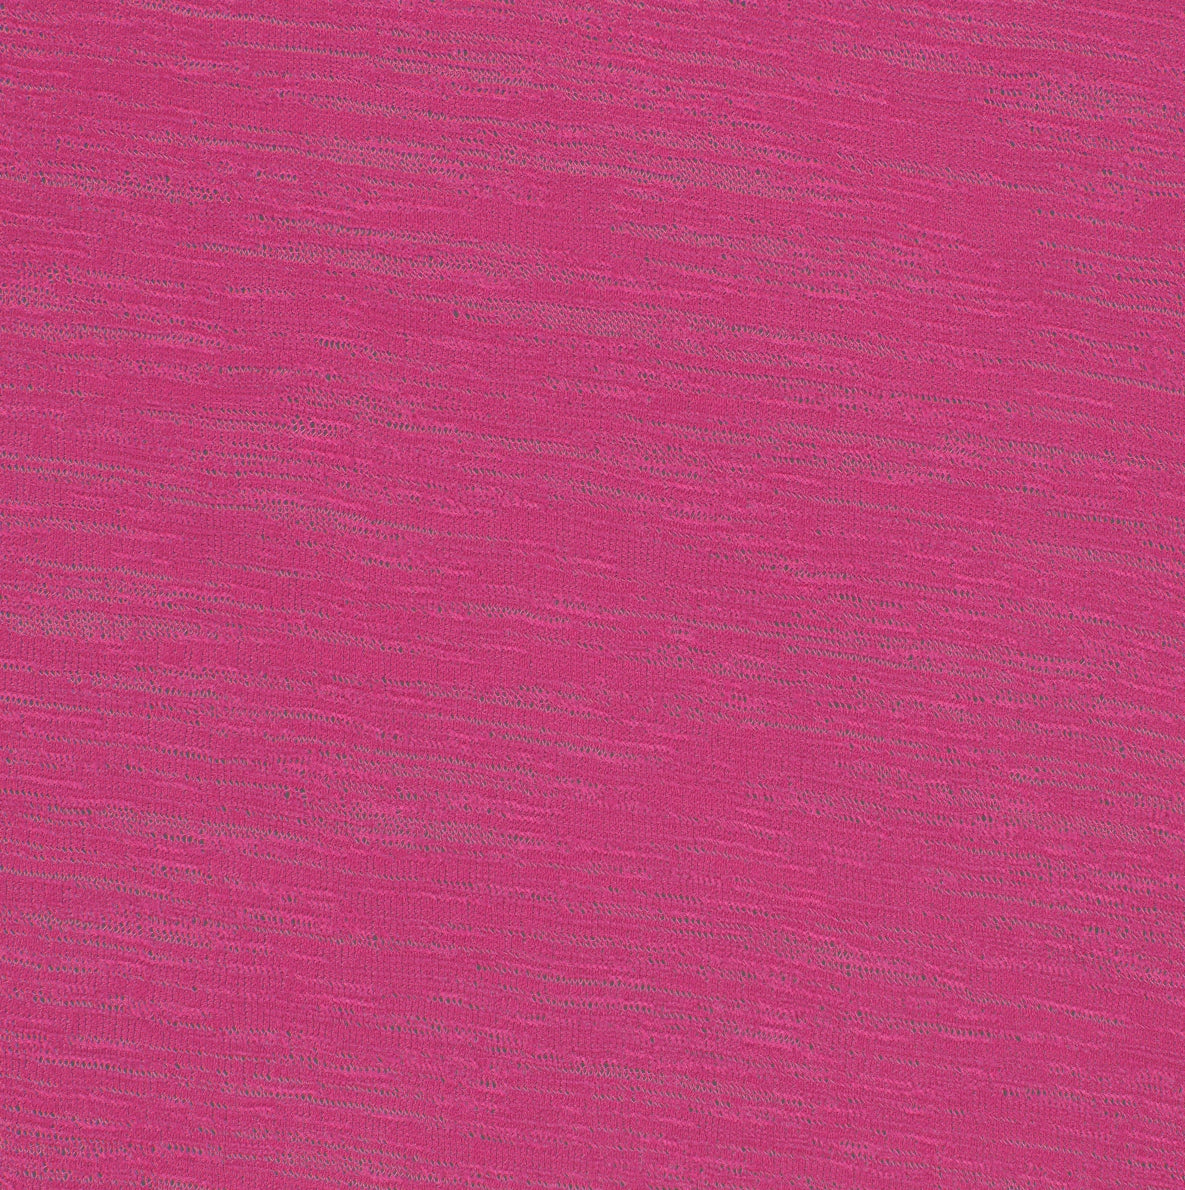 15011-05 Violet Red Polyester Plain Dyed 100% 58&quot; 95g/yd knit pink plain dyed polyester Solid Color - knit fabric - woven fabric - fabric company - fabric wholesale - fabric b2b - fabric factory - high quality fabric - hong kong fabric - fabric hk - acetate fabric - cotton fabric - linen fabric - metallic fabric - nylon fabric - polyester fabric - spandex fabric - chun wing hing - cwh hk - fabric worldwide ship - 針織布 - 梳織布 - 布料公司- 布料批發 - 香港布料 - 秦榮興